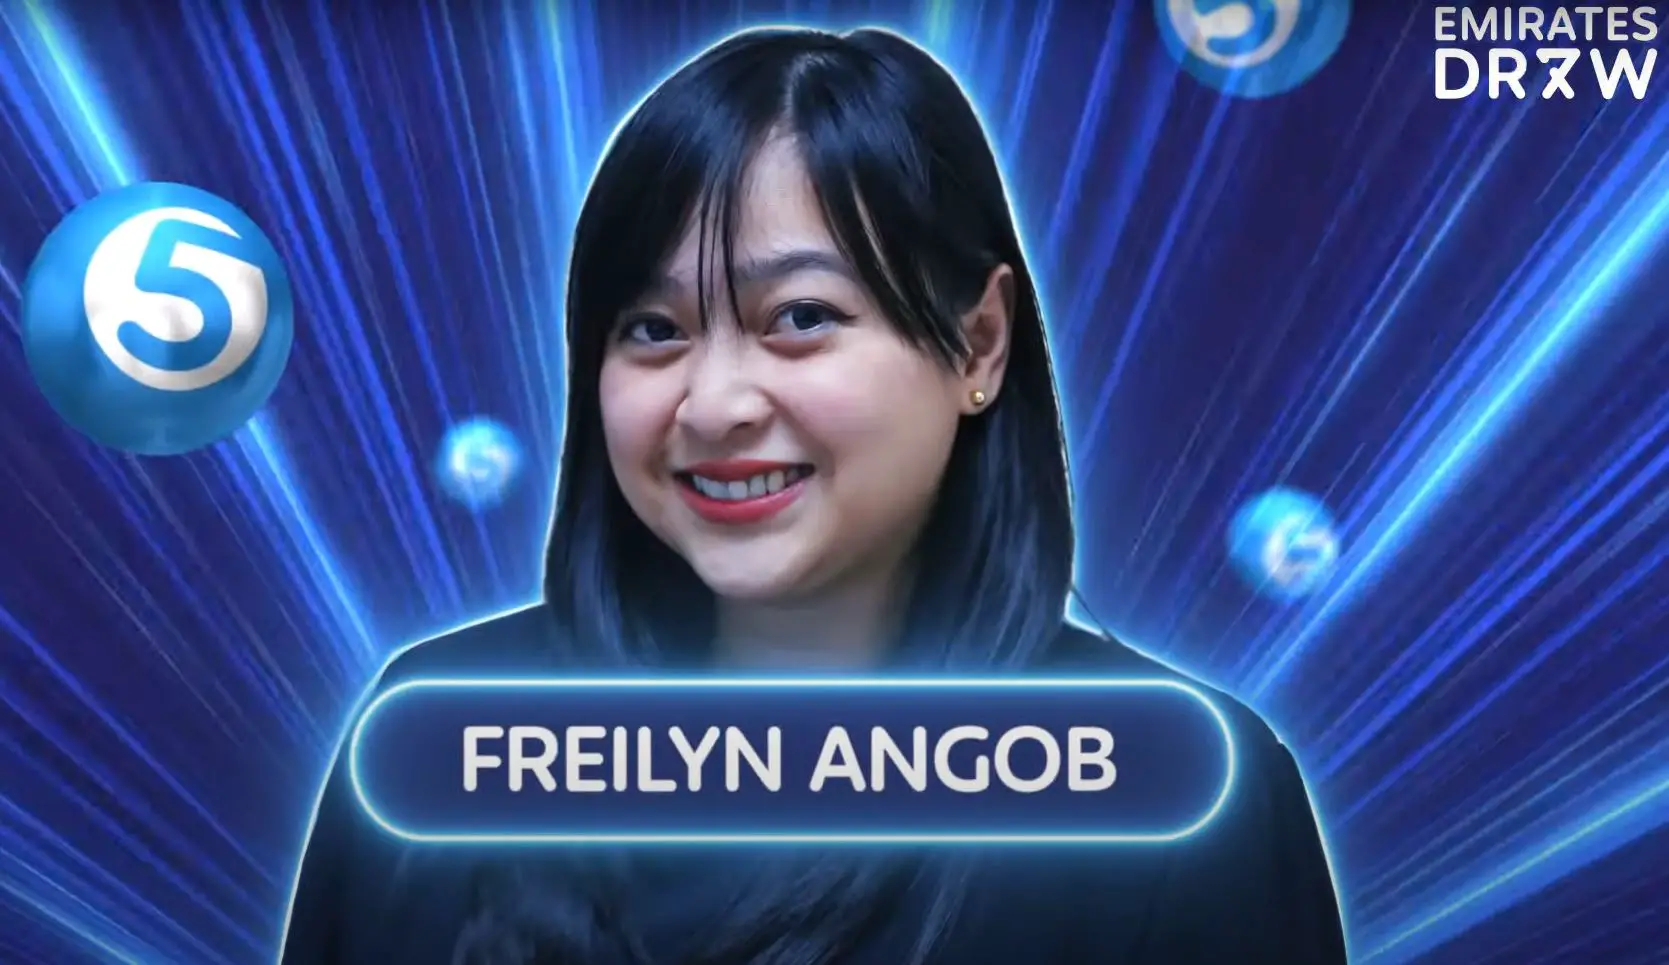 Freilyn Angob fast 5 Grand prize winner